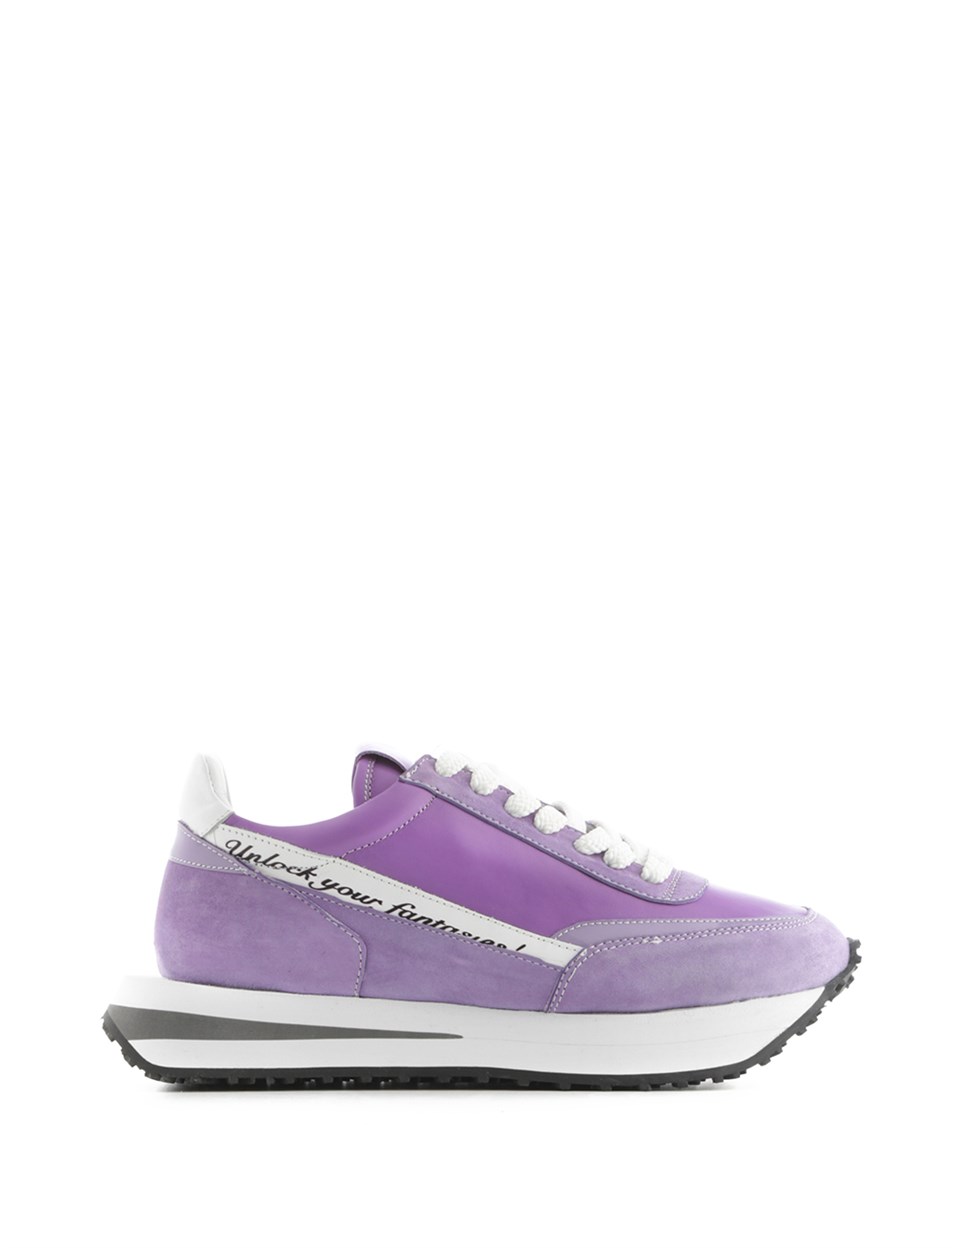 Santo Lilac Leather-Lilac Suede Women's Sneaker - İLVİ